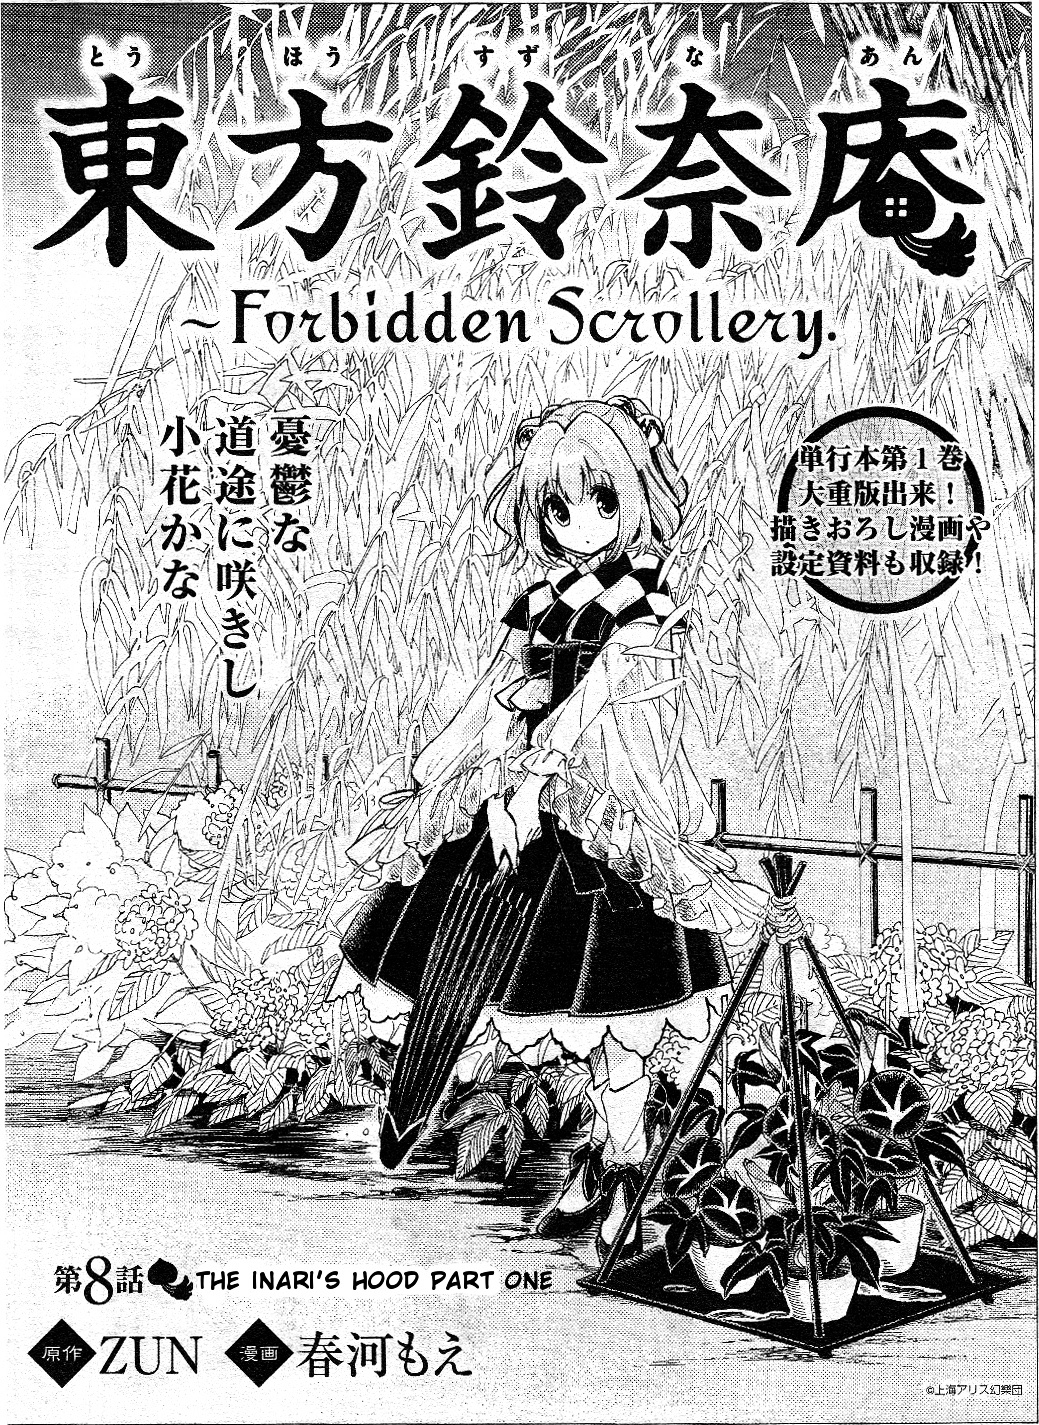 Touhou Suzunaan - Forbidden Scrollery. - Page 1